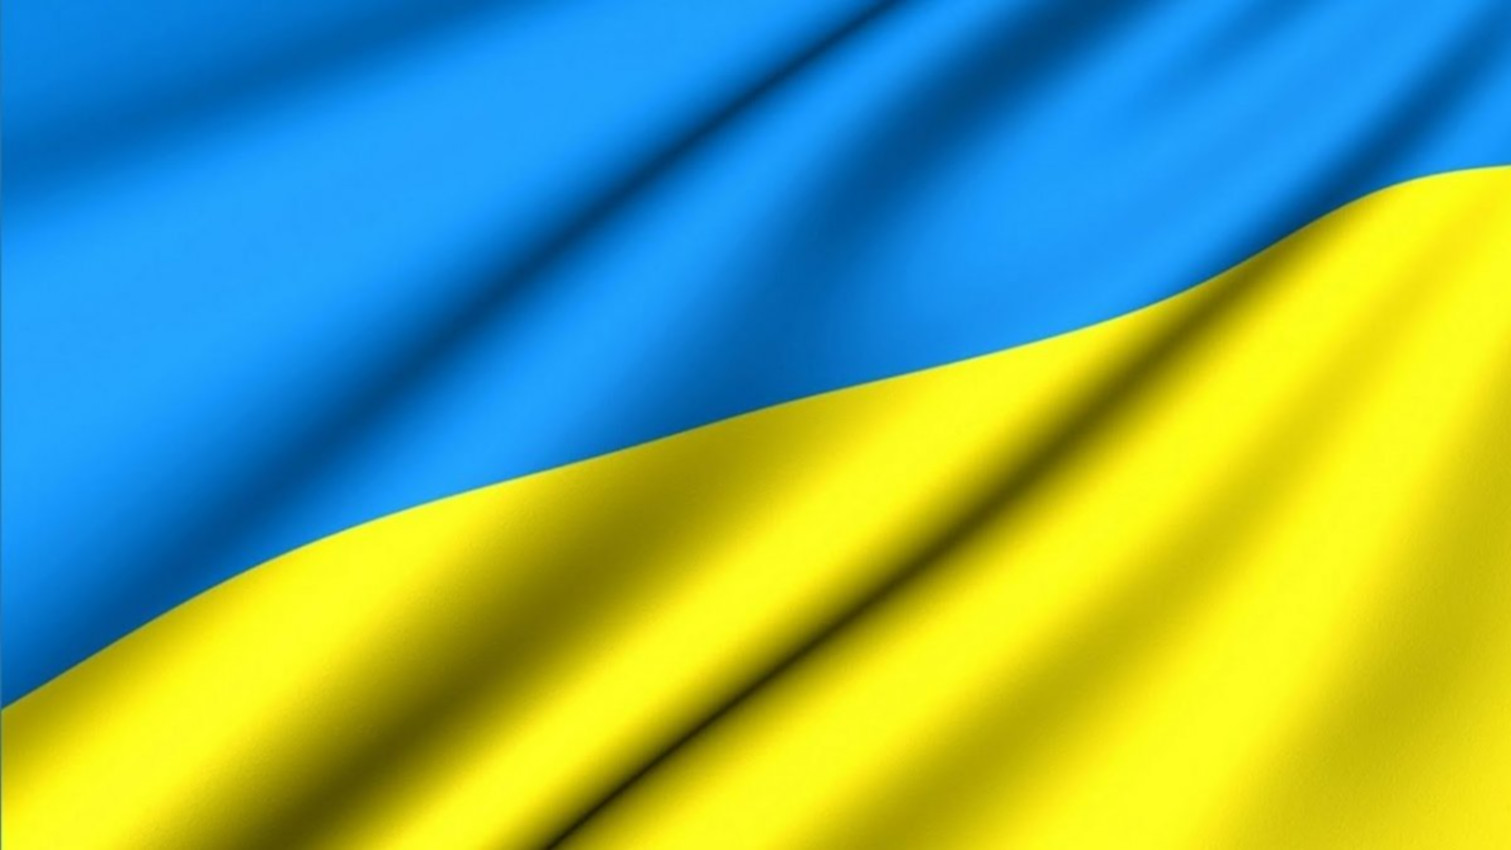 Флаг с цветами синий желтый. Украина флаг Украины. Флаг Укуриана. Желто блакитный флаг Украины. Украинский прапор флаг.